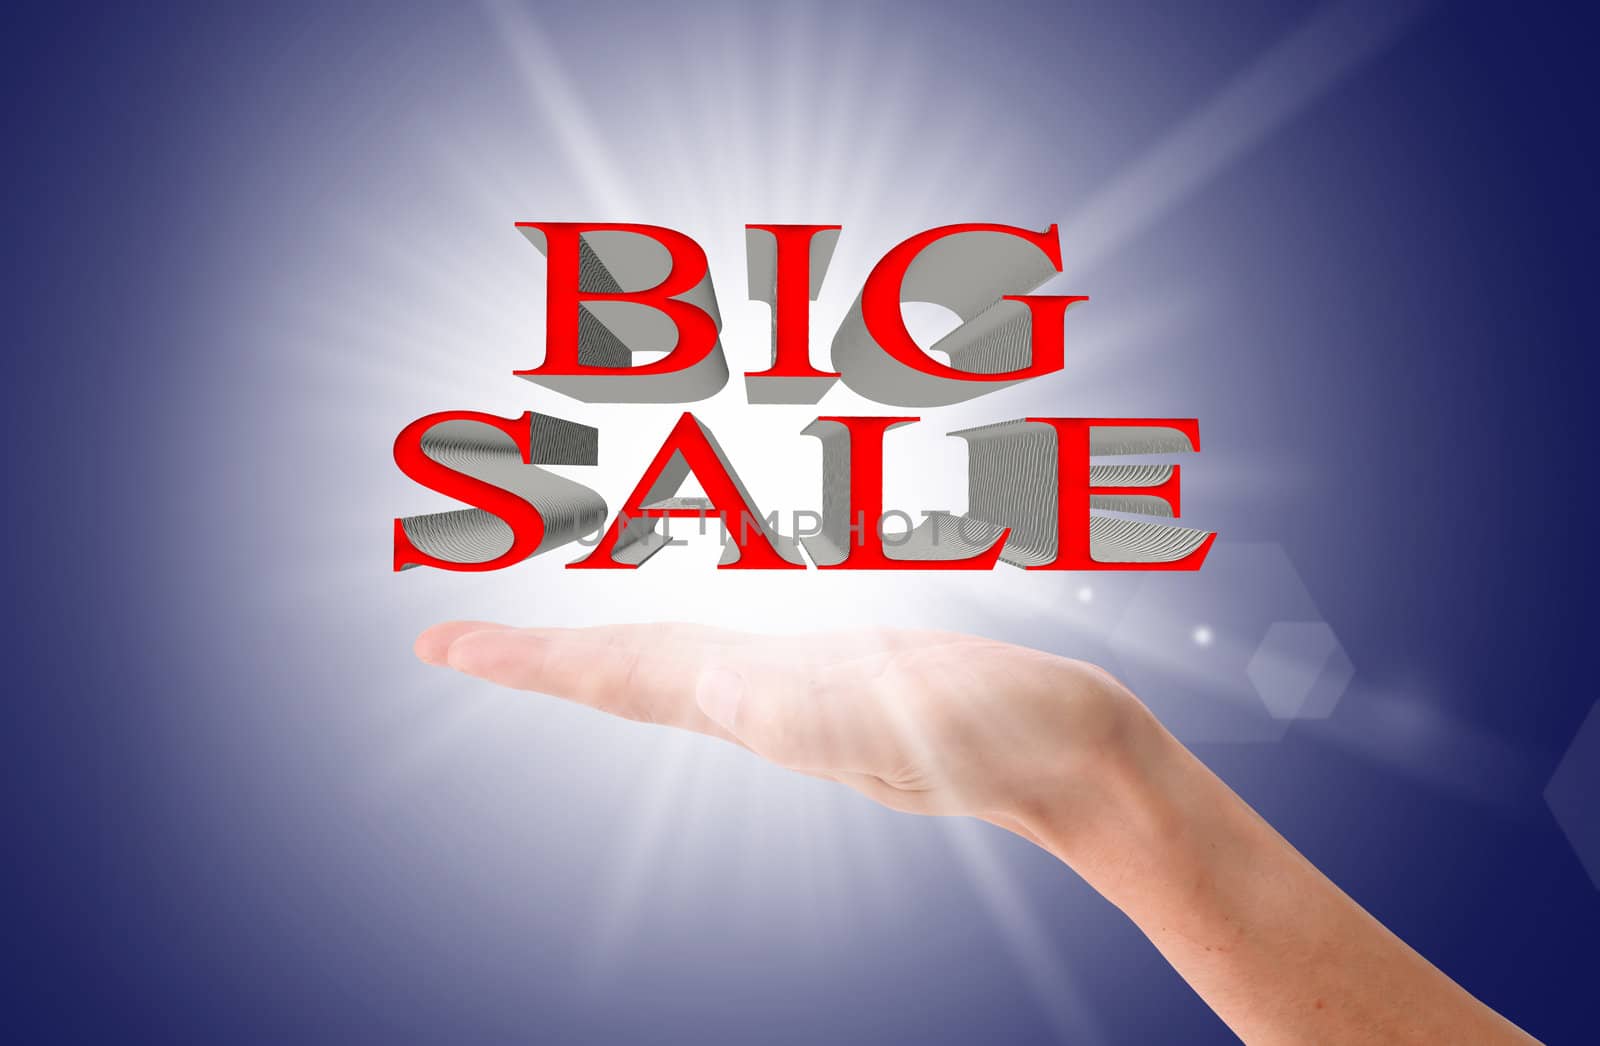 Big sale discount advertisement